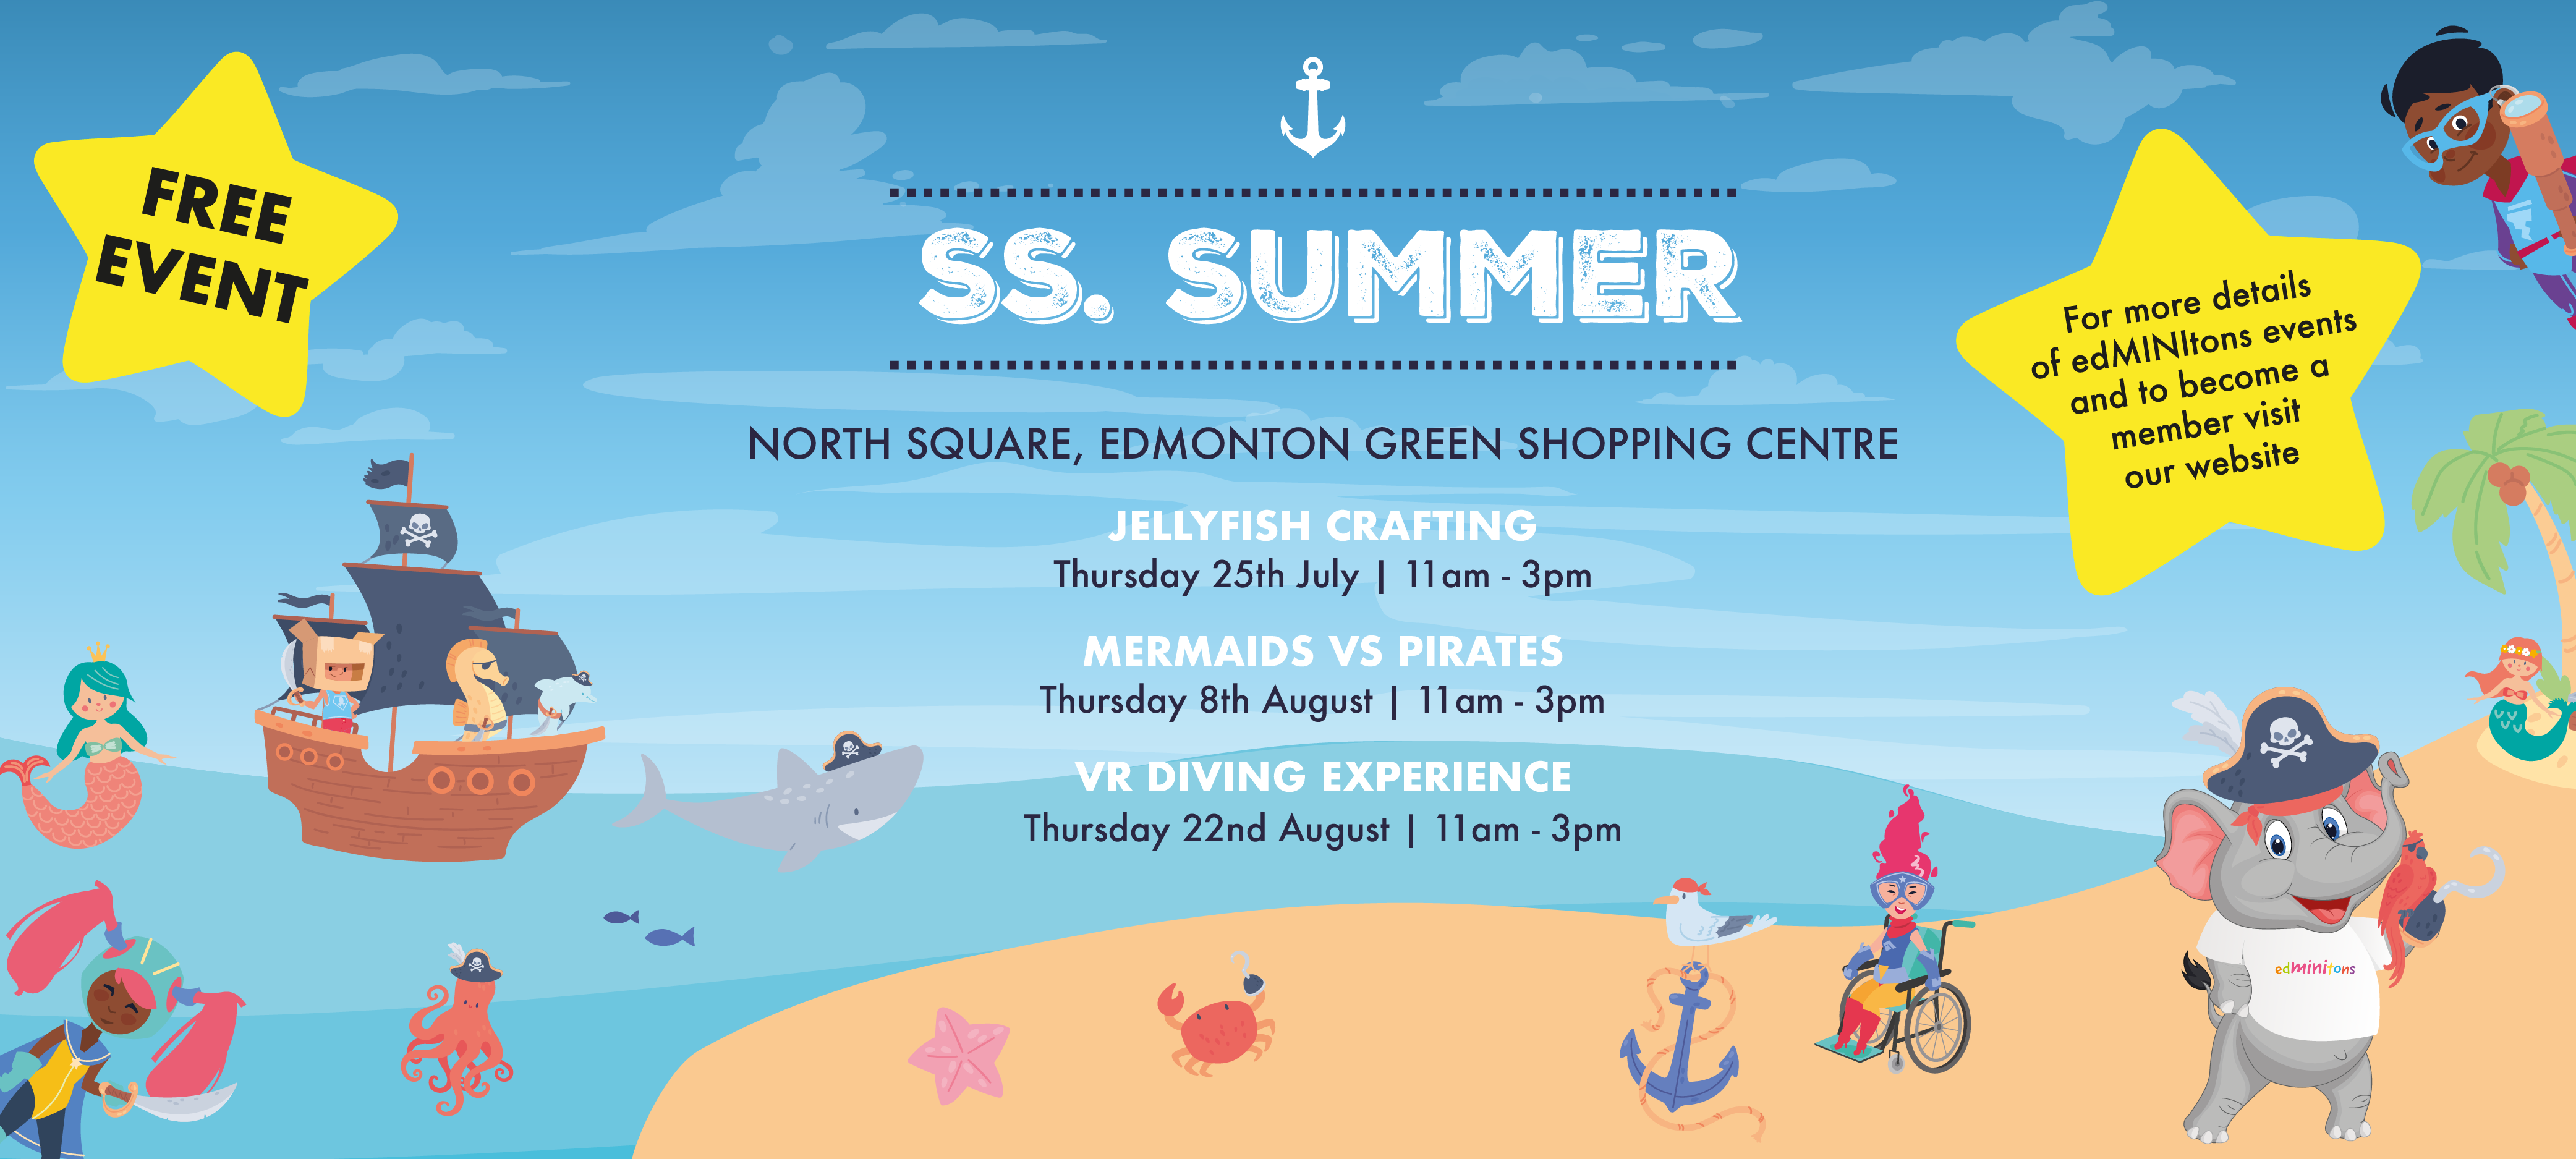 Free Kids Summer Events at Edmonton Green Enfield